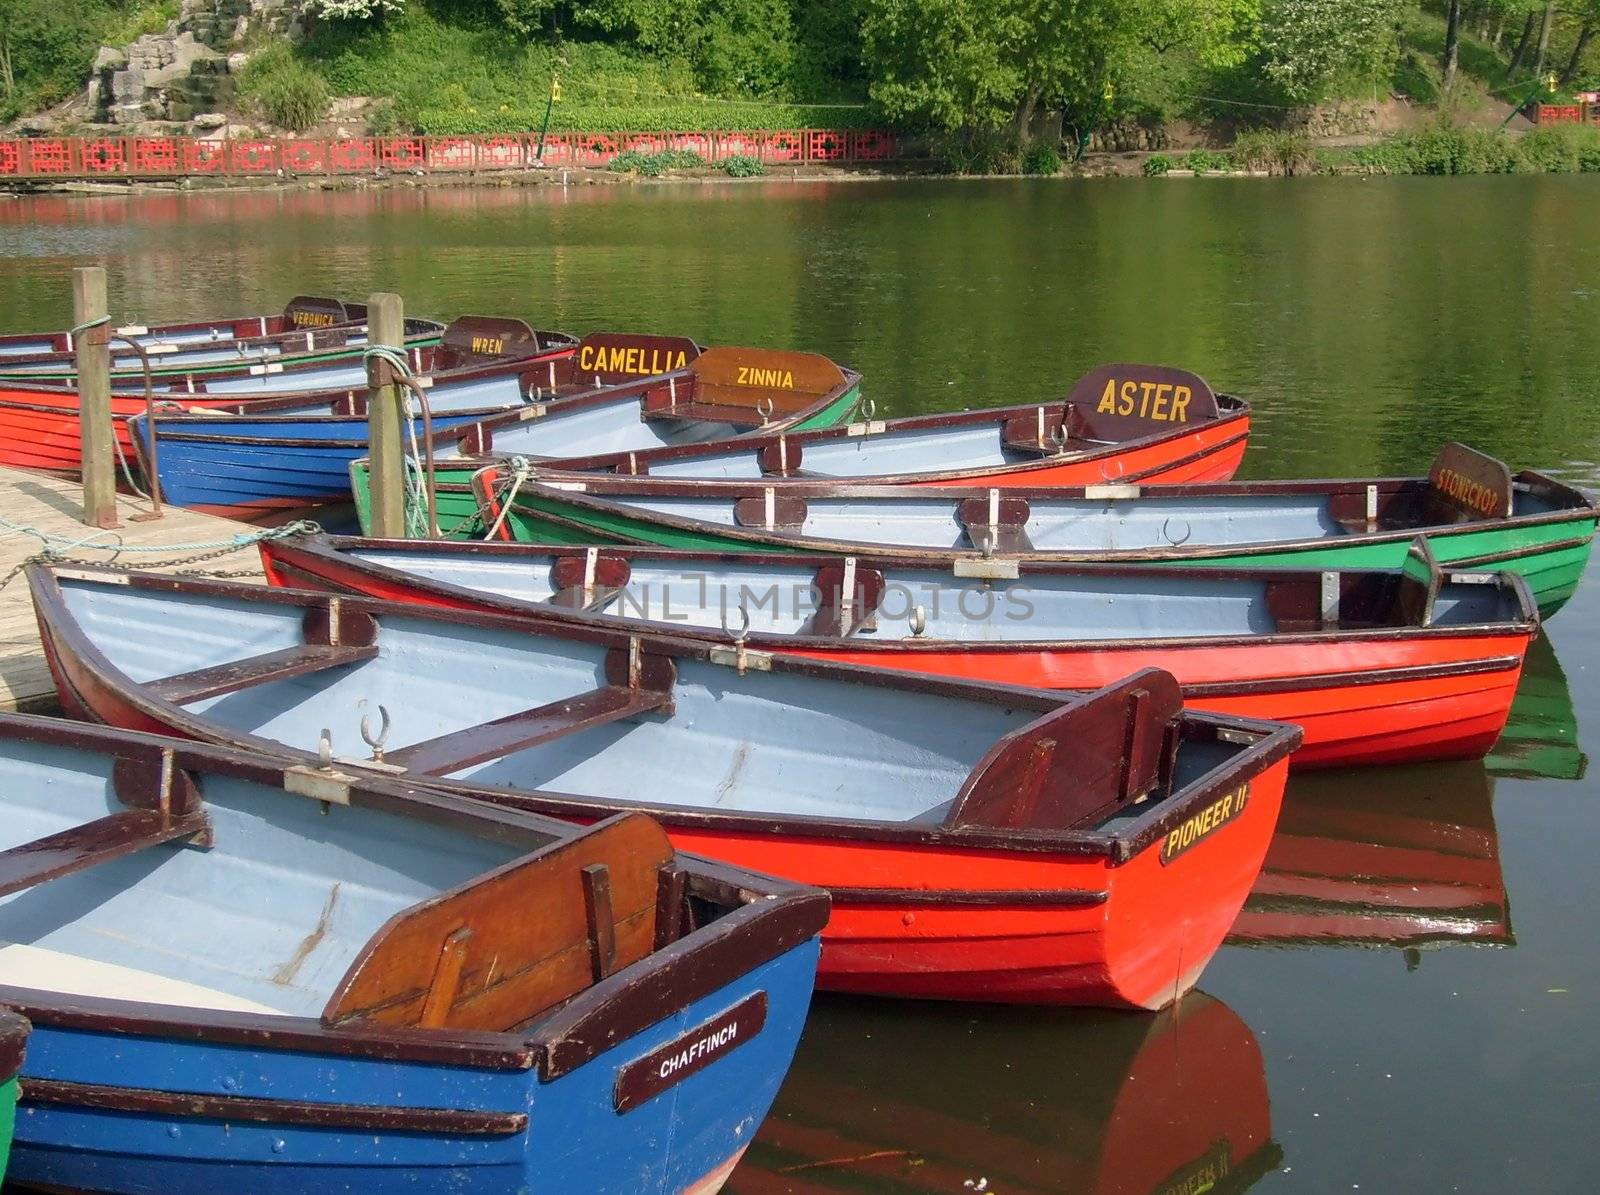 Colorful boats on boating lake, Peasholm Park, Scarborough, England.